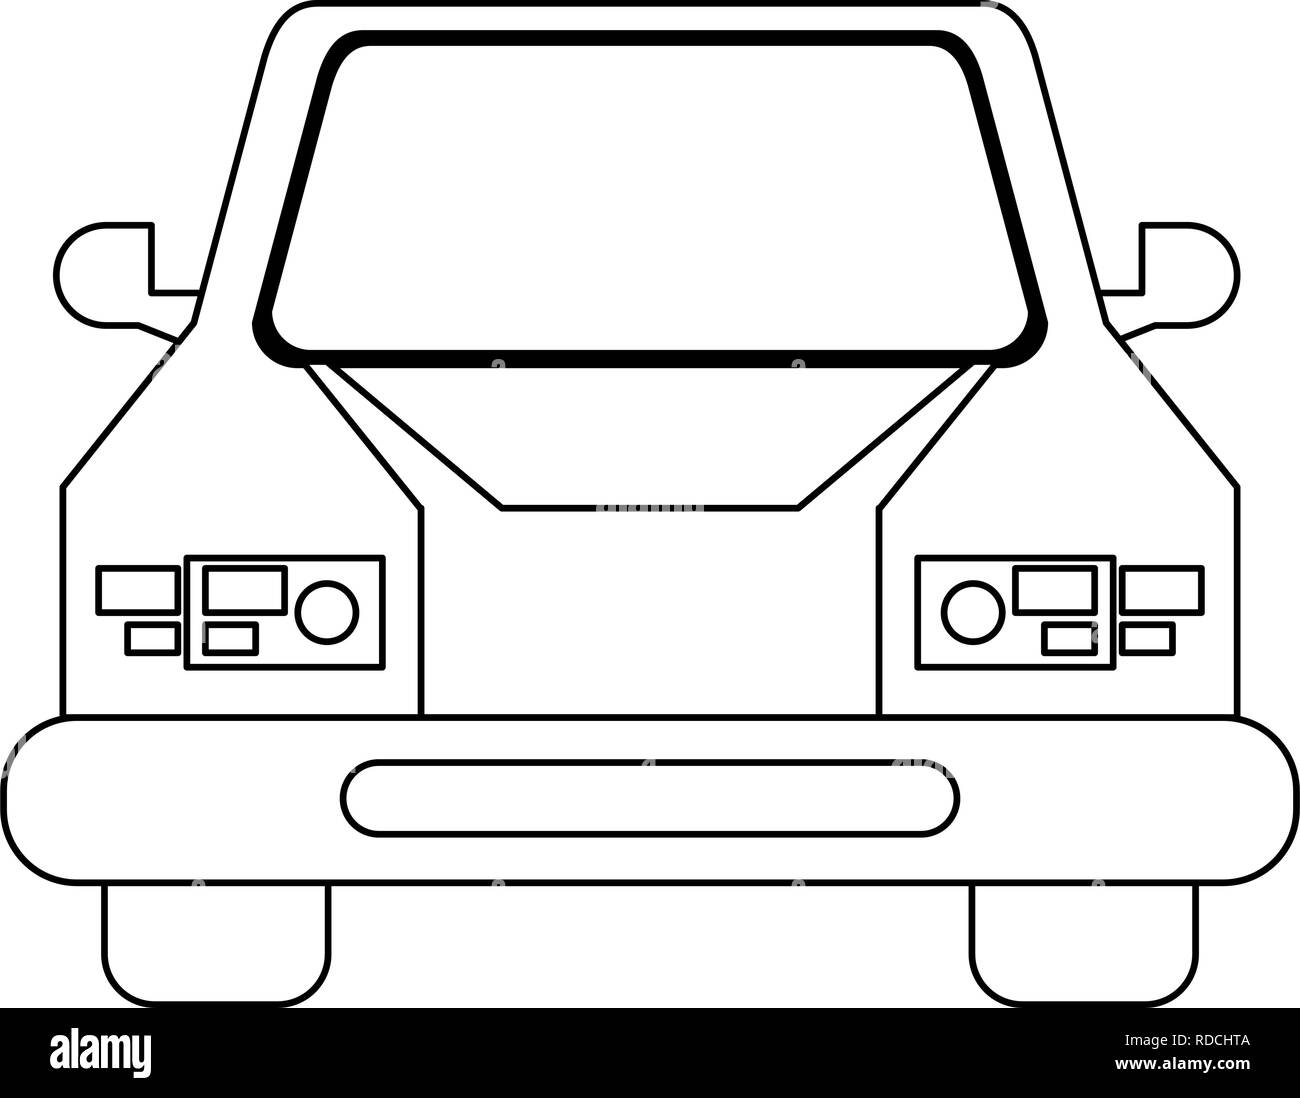 Auto vorne Fahrzeug Stock-Vektorgrafik - Alamy